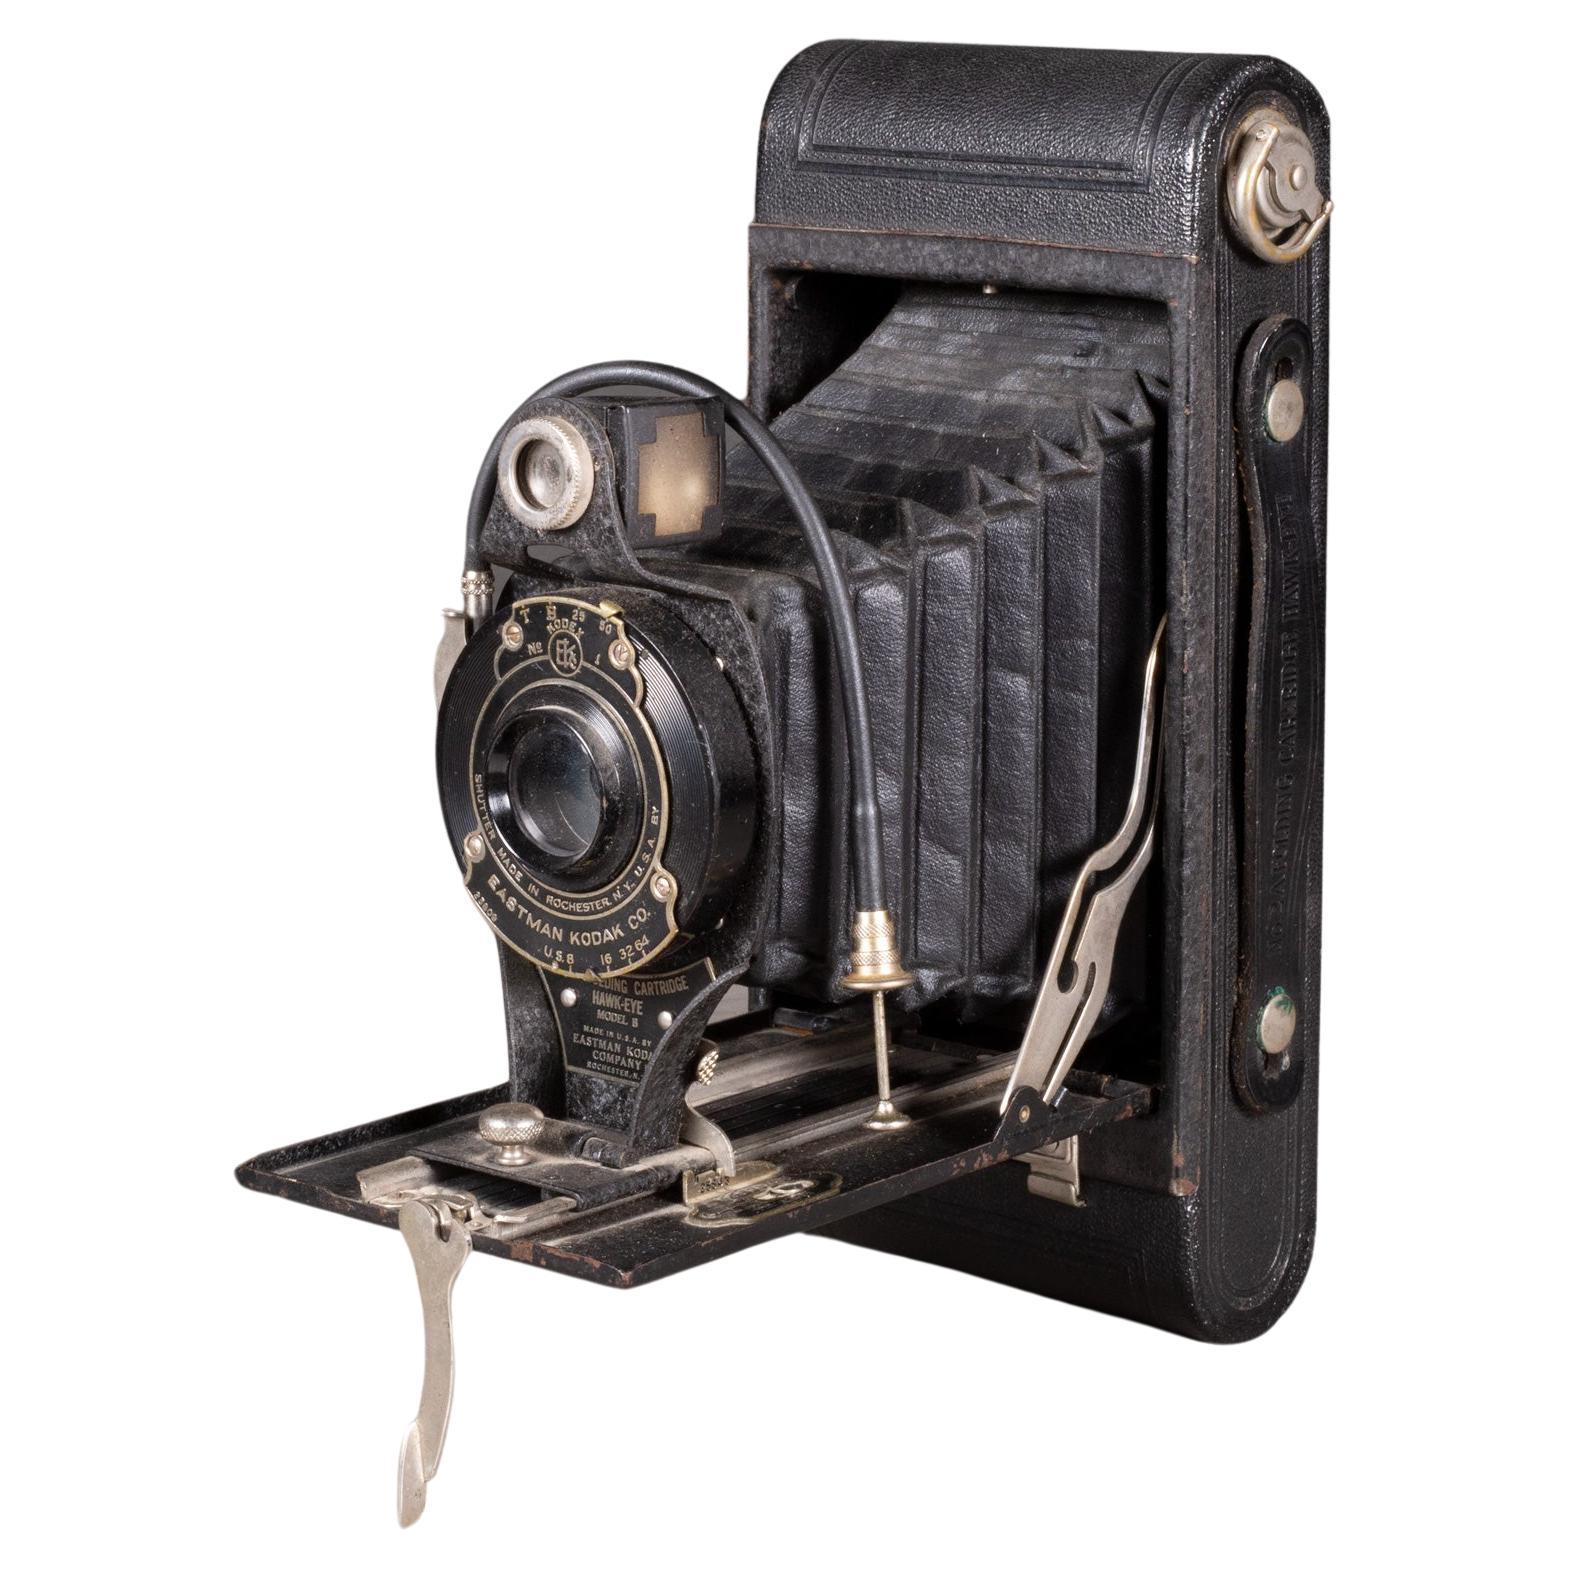 Antique Kodak Hawk-Eye No. 2A Folding Camera c.1926-1934 (FREE SHIPPING)